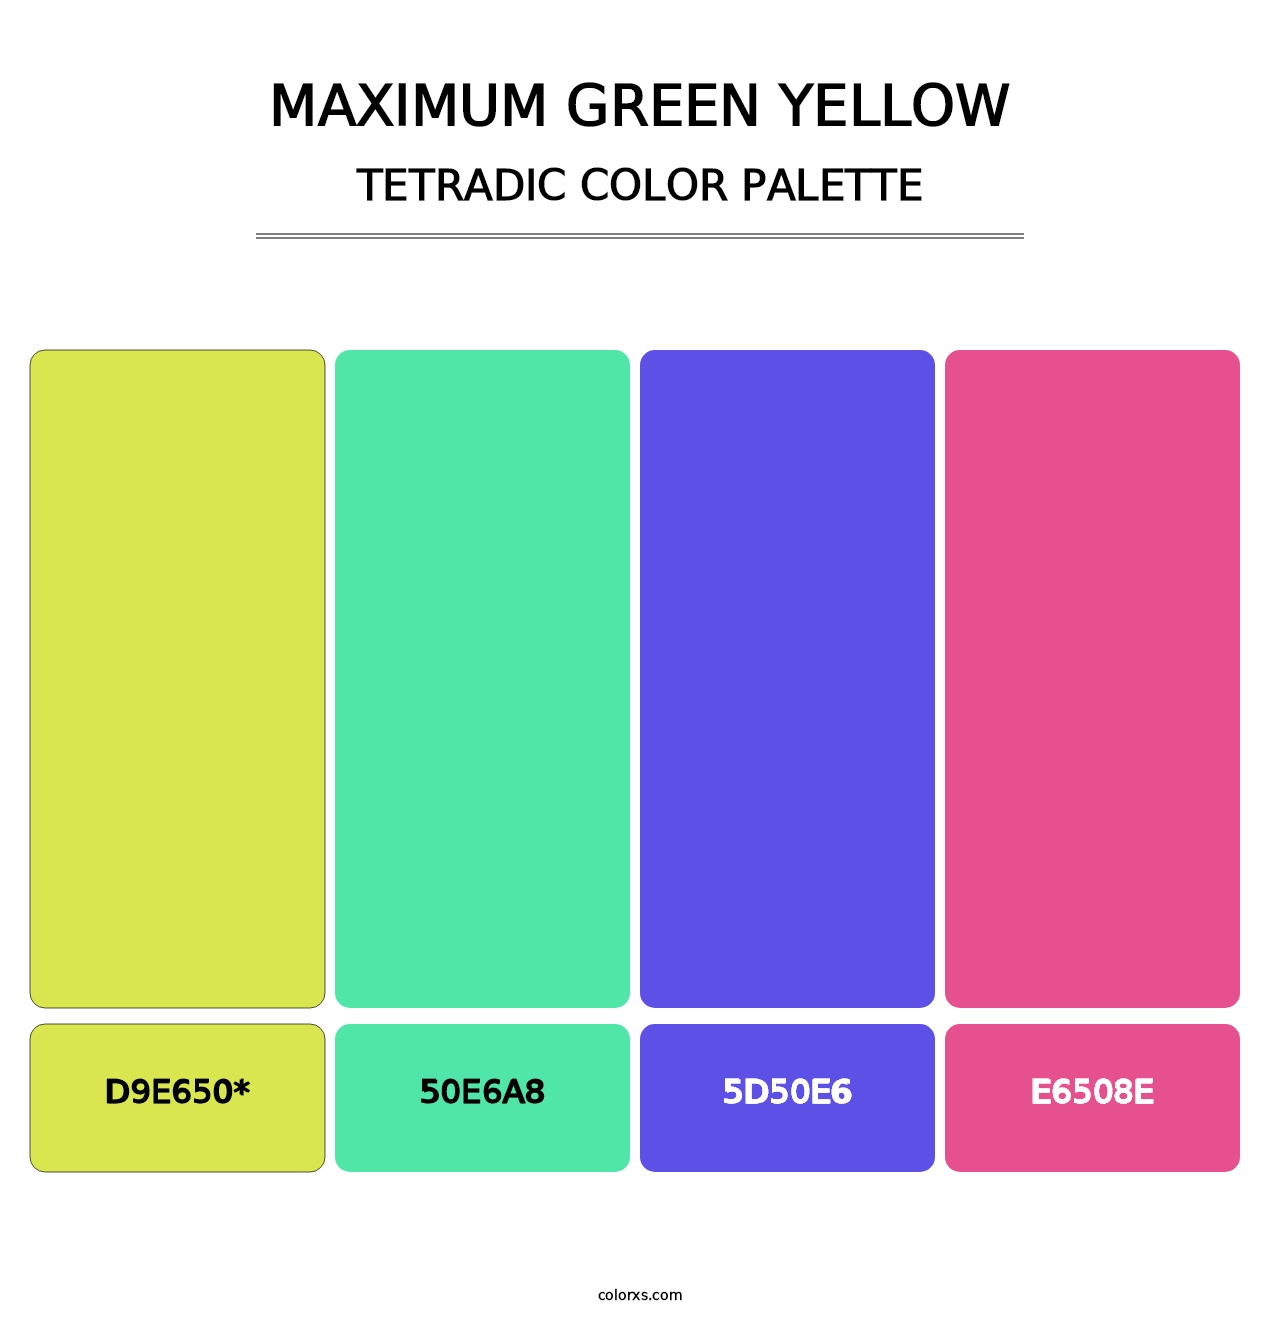 Maximum Green Yellow - Tetradic Color Palette